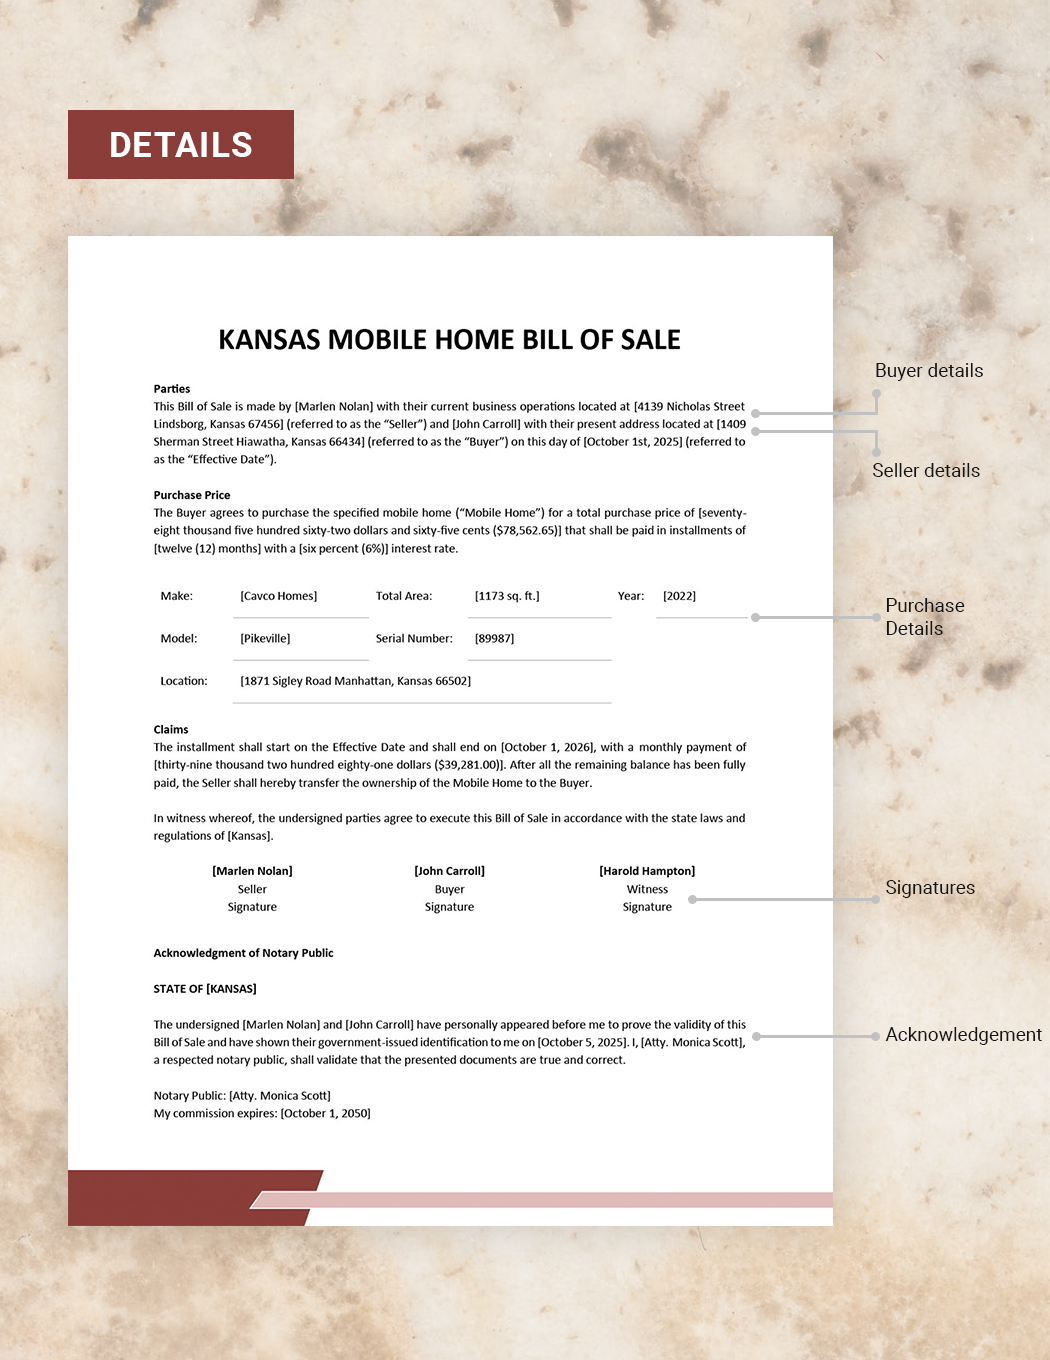 Kansas Mobile Home Bill of Sale Template